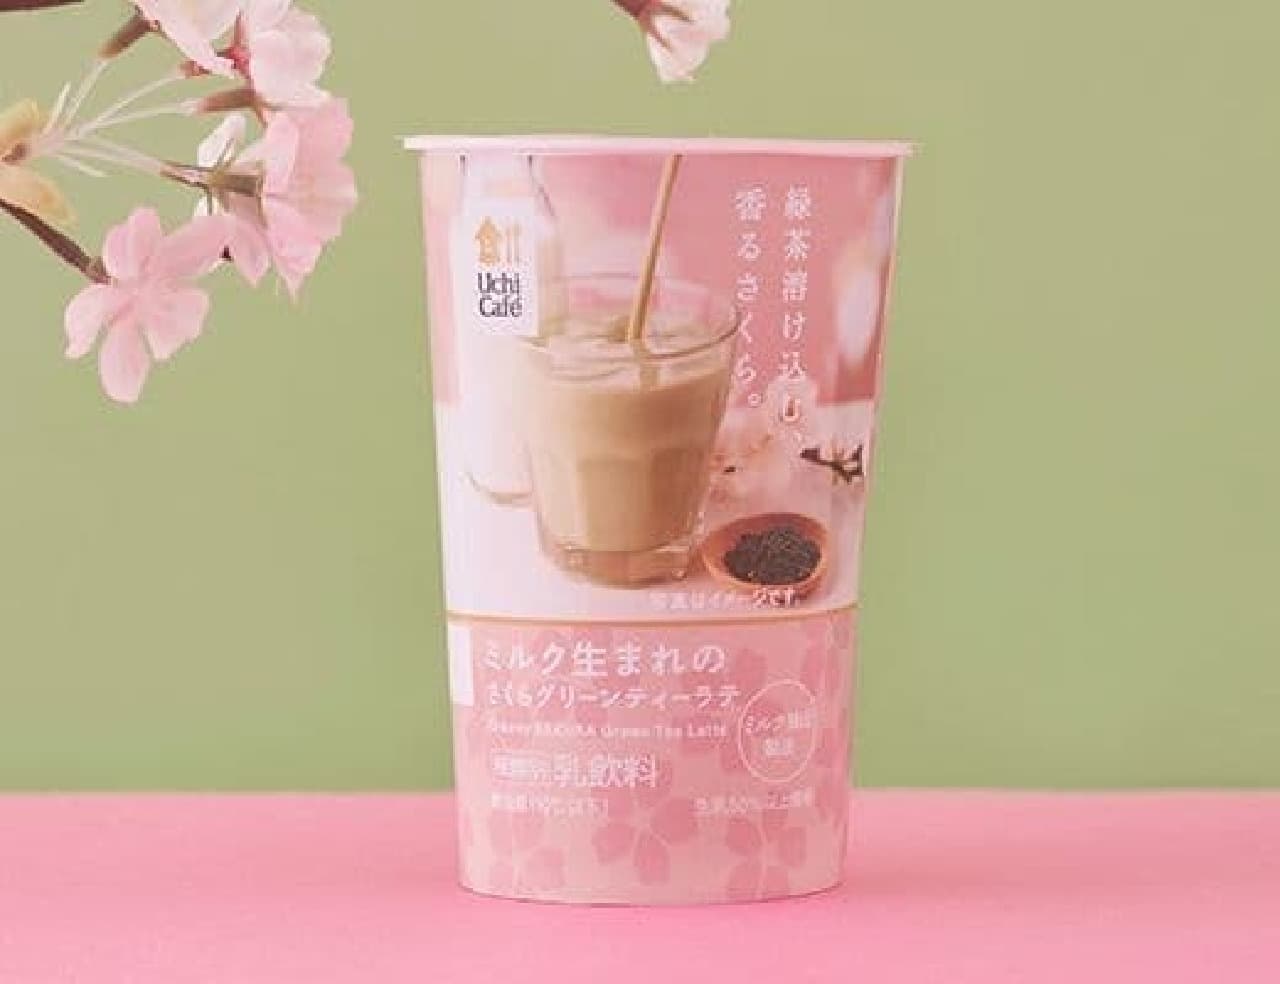 Lawson "Uchi Cafe Milk-born Sakura Green Tea Latte 200ml"